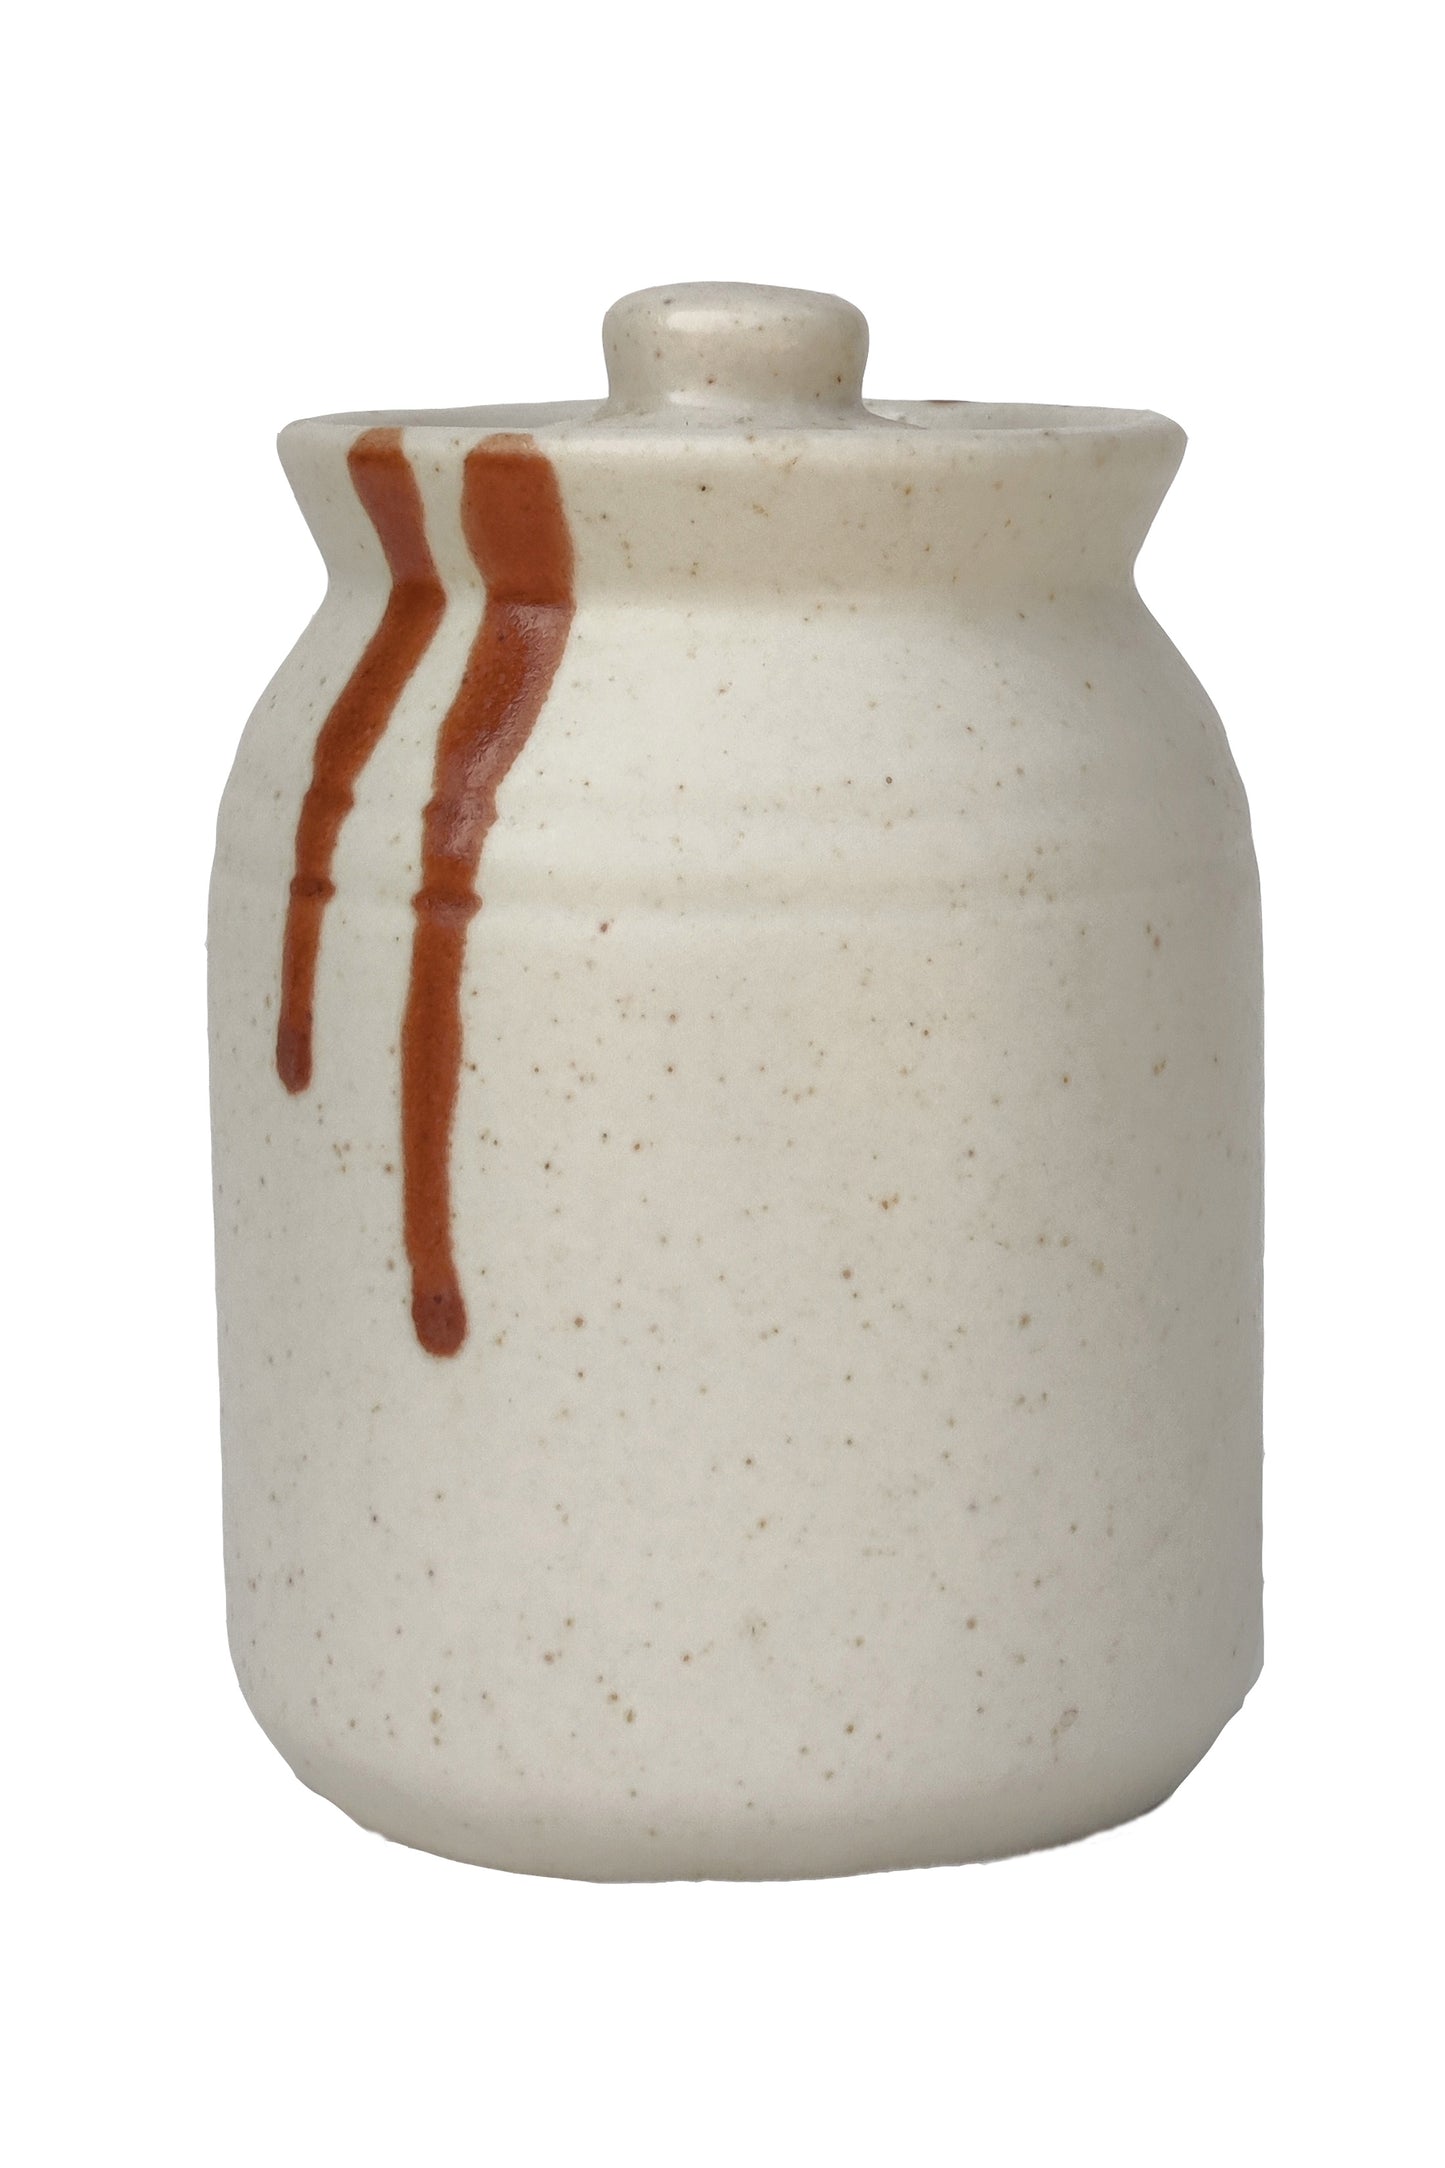 Mustard Storage Ceramic Jars